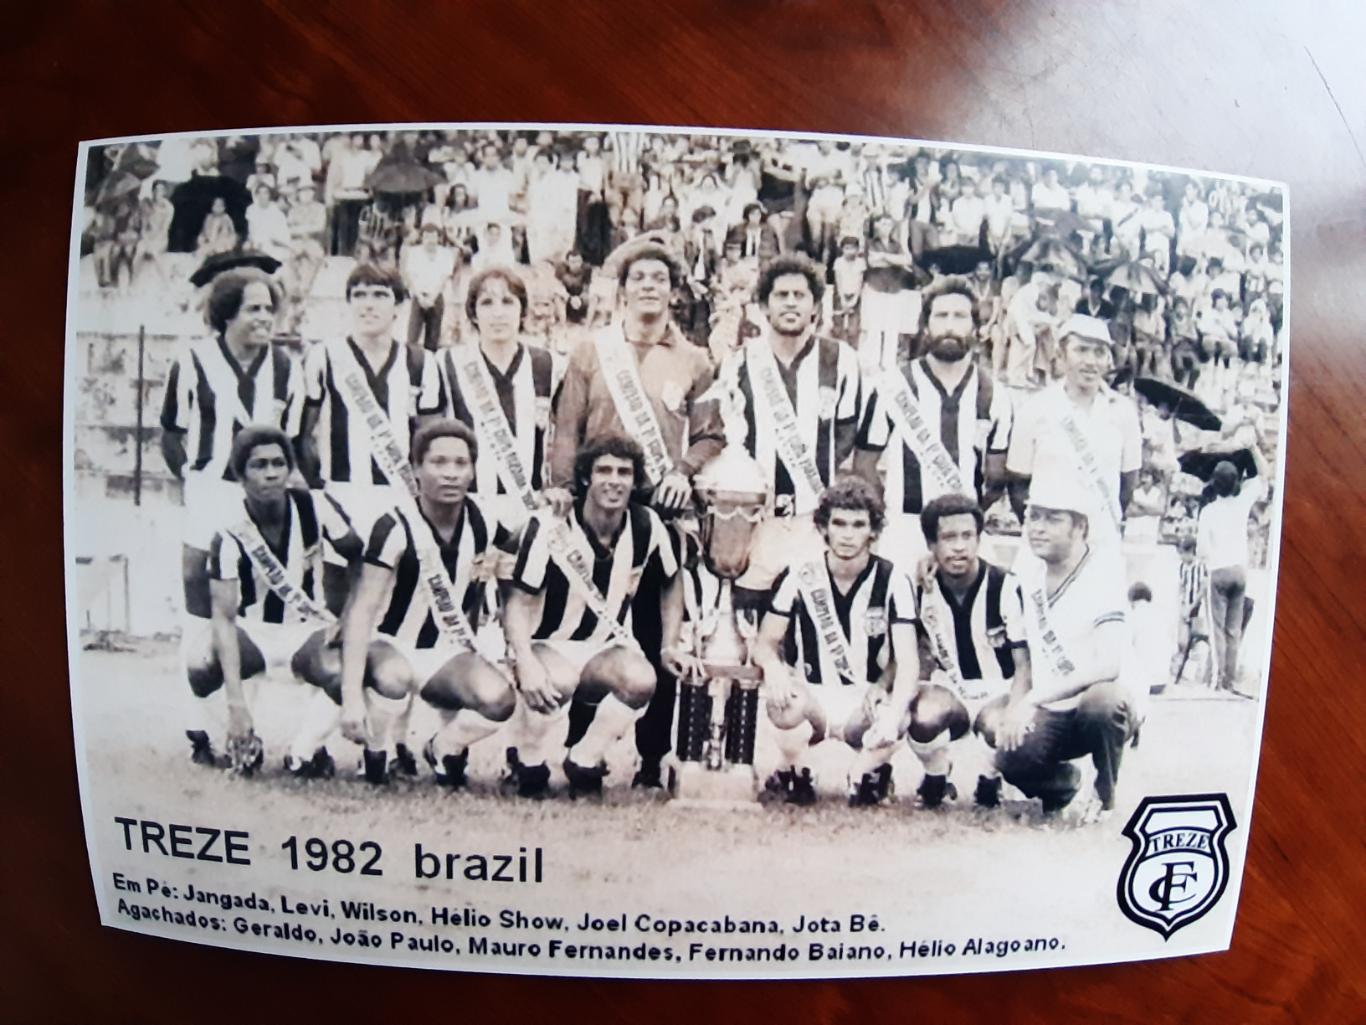 TREZE 1982 (BRAZIL)